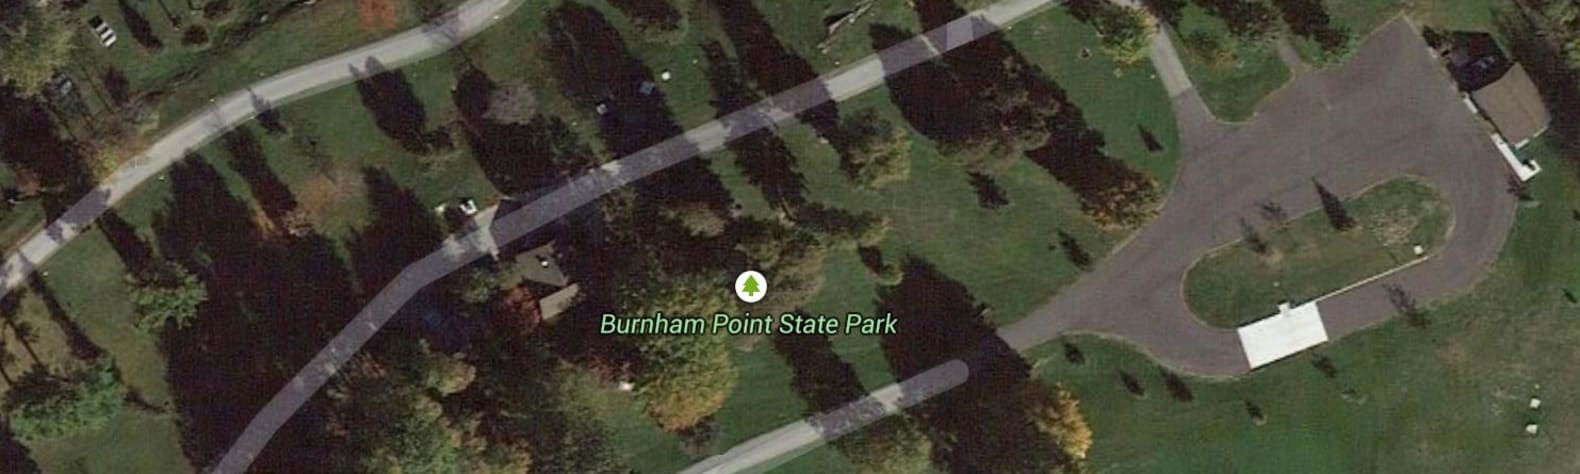 Burnham Point State Park